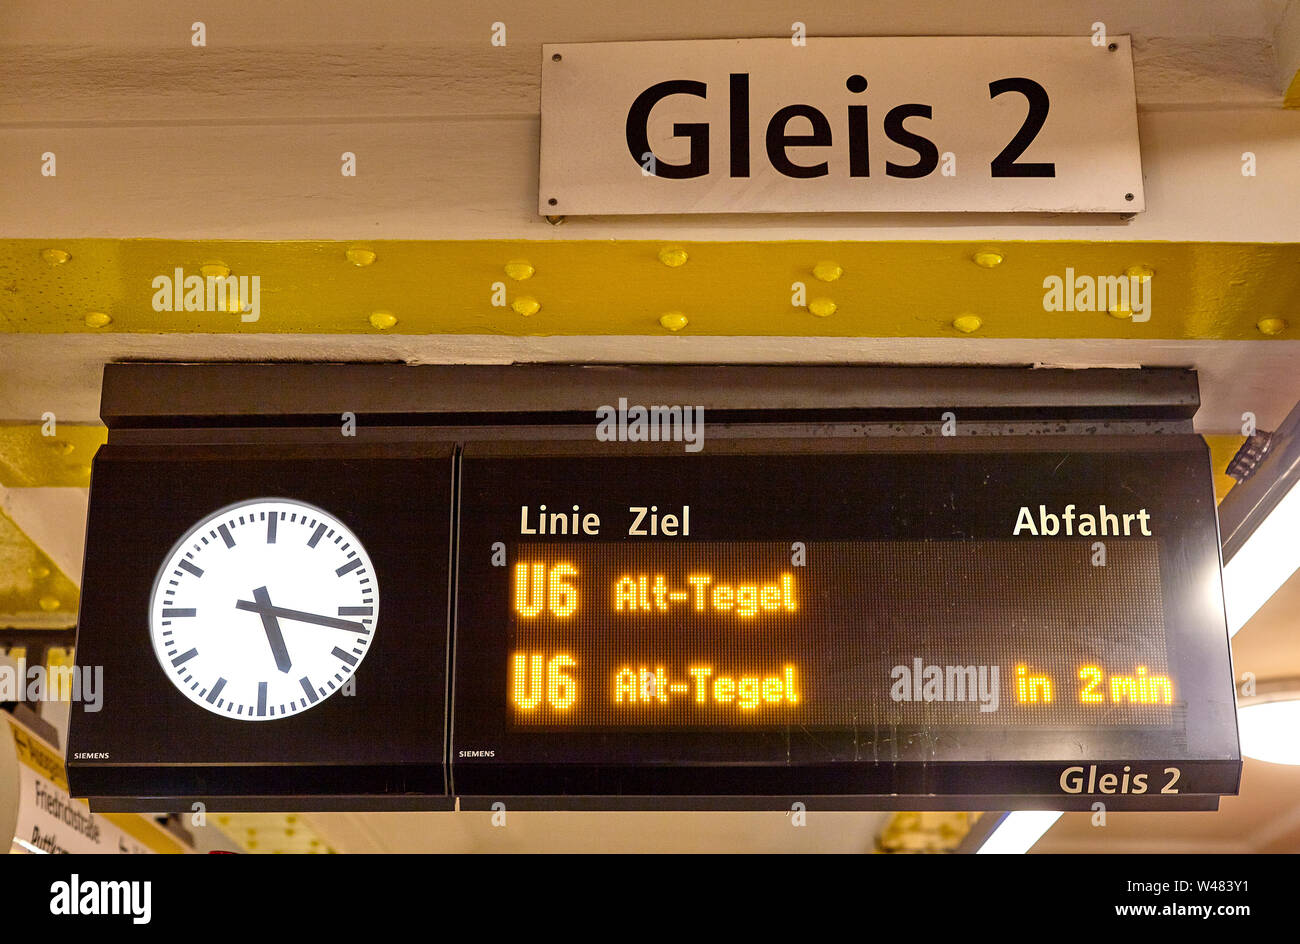 Train Times board in The Berlin U-Bahn which is a rapid transit railway in Berlin, the capital city of Germany Stock Photo